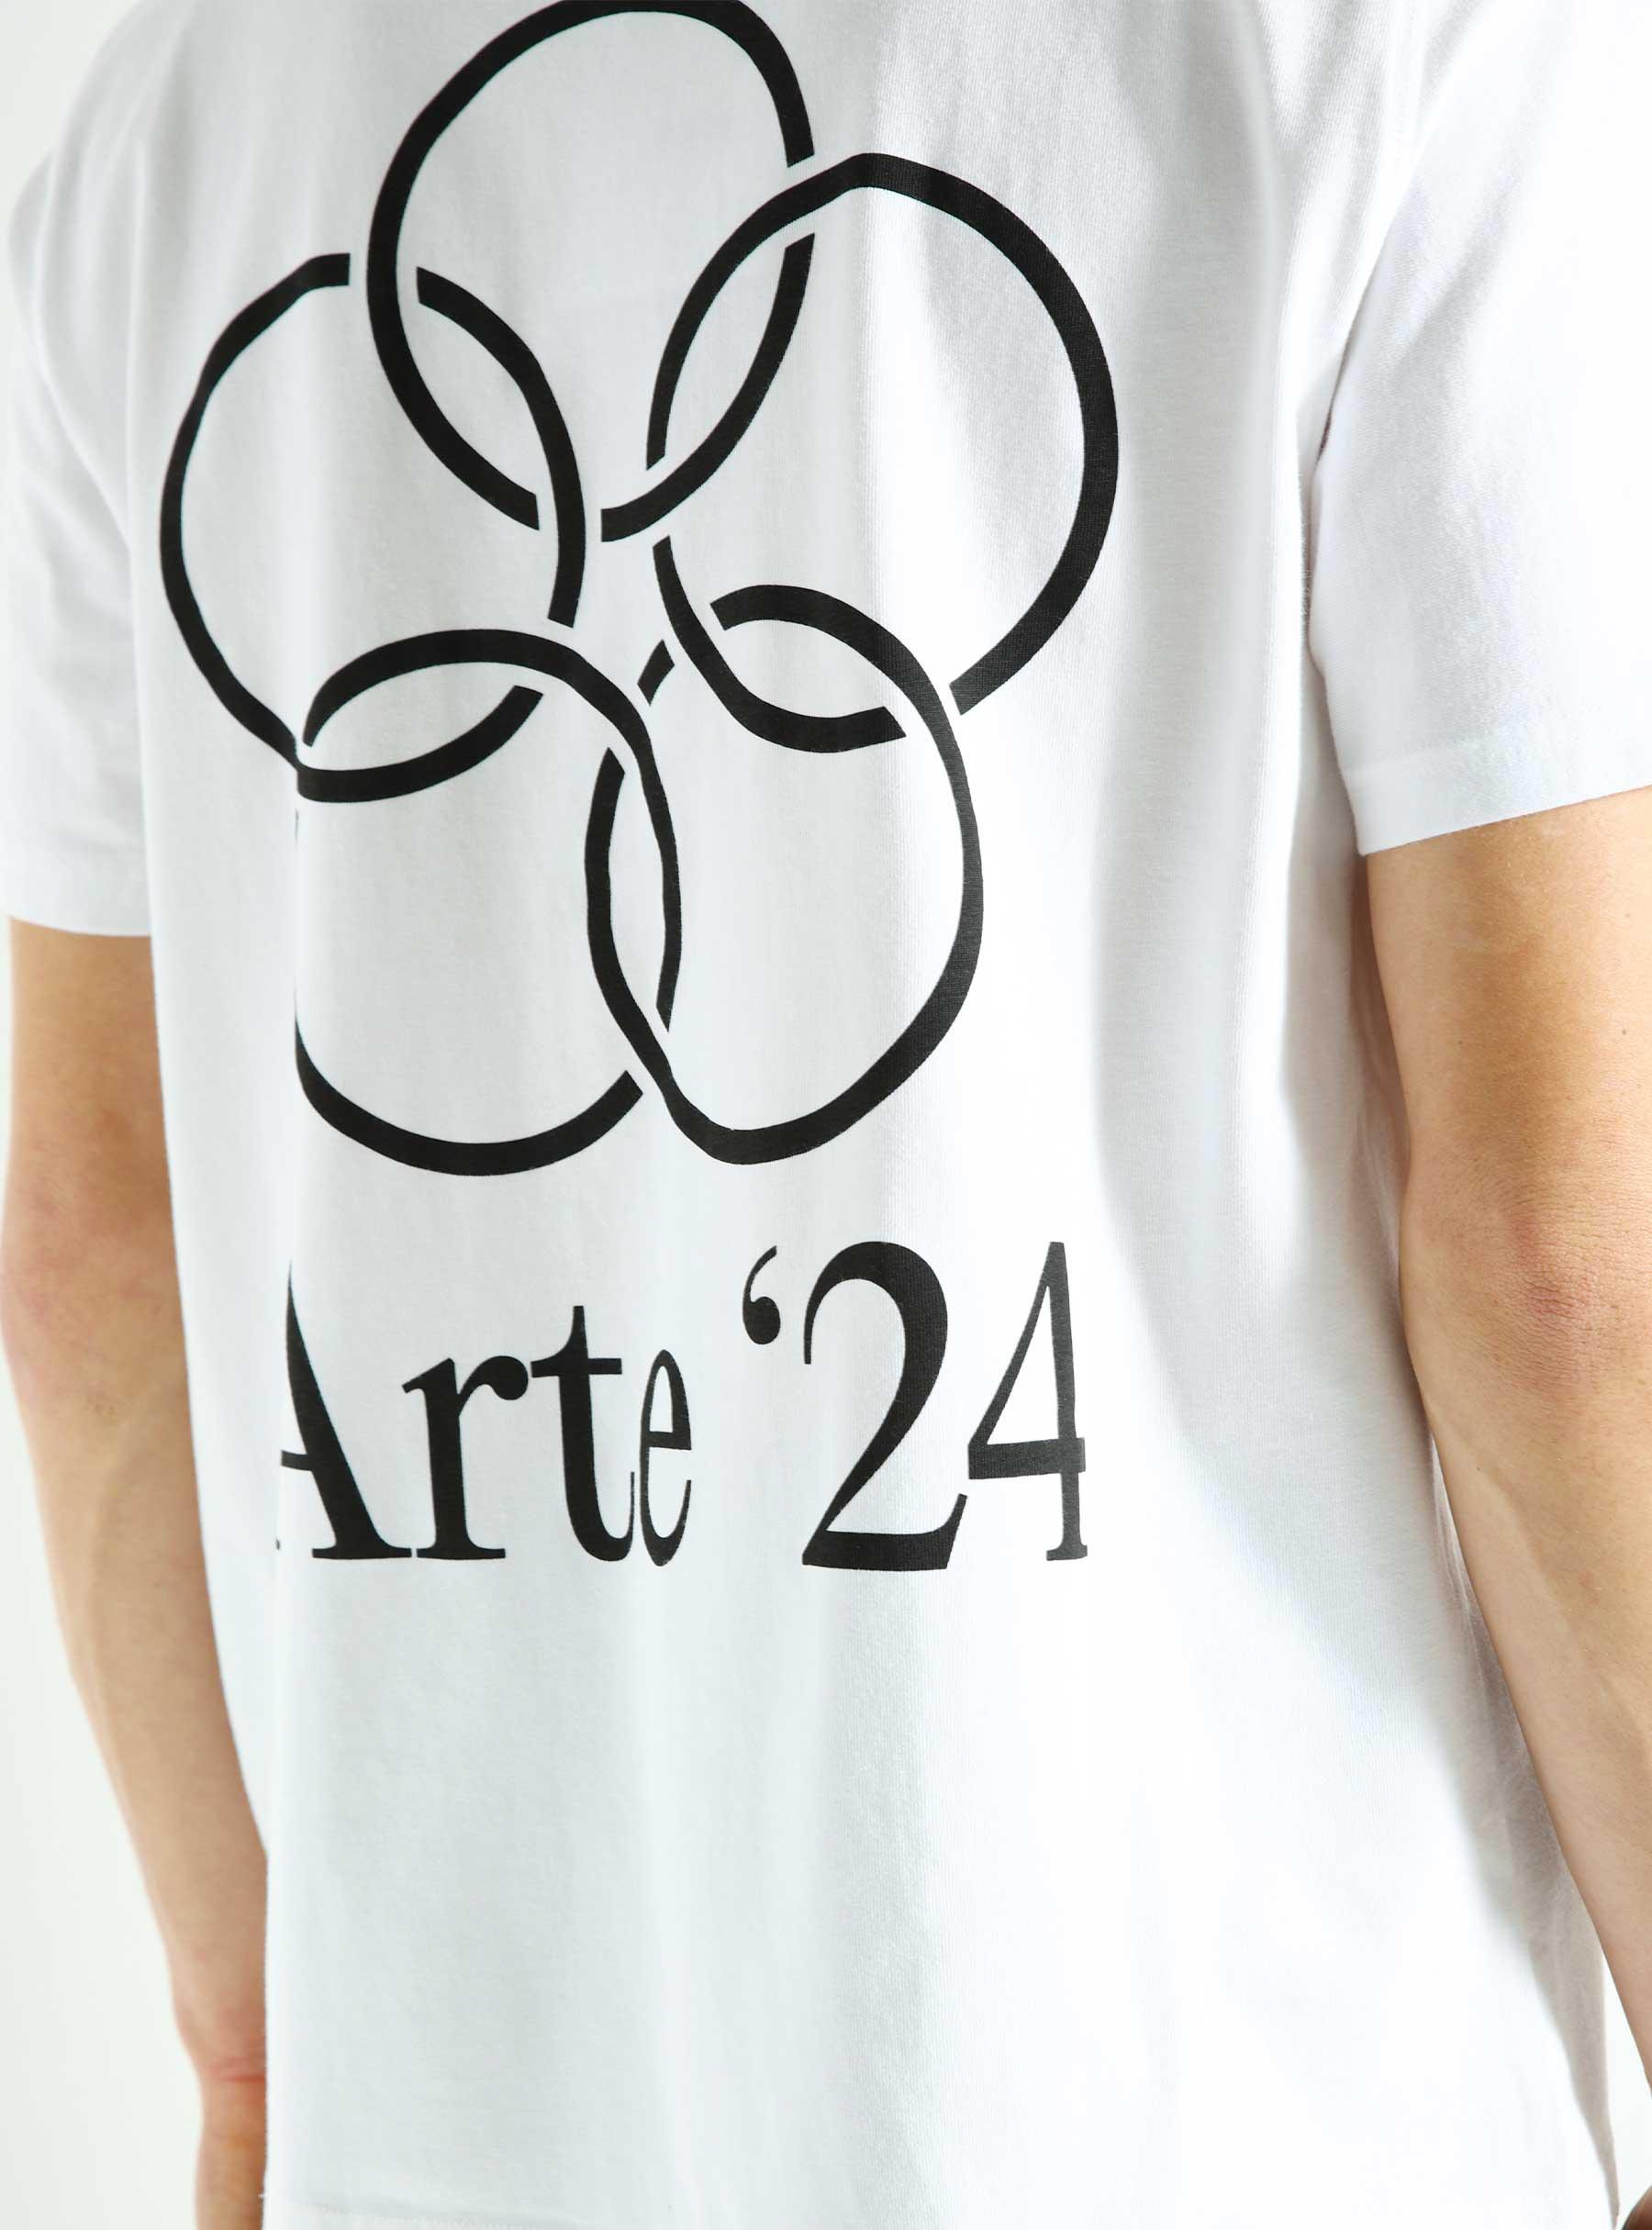 Teo Back Rings T-shirt White SS24-032T